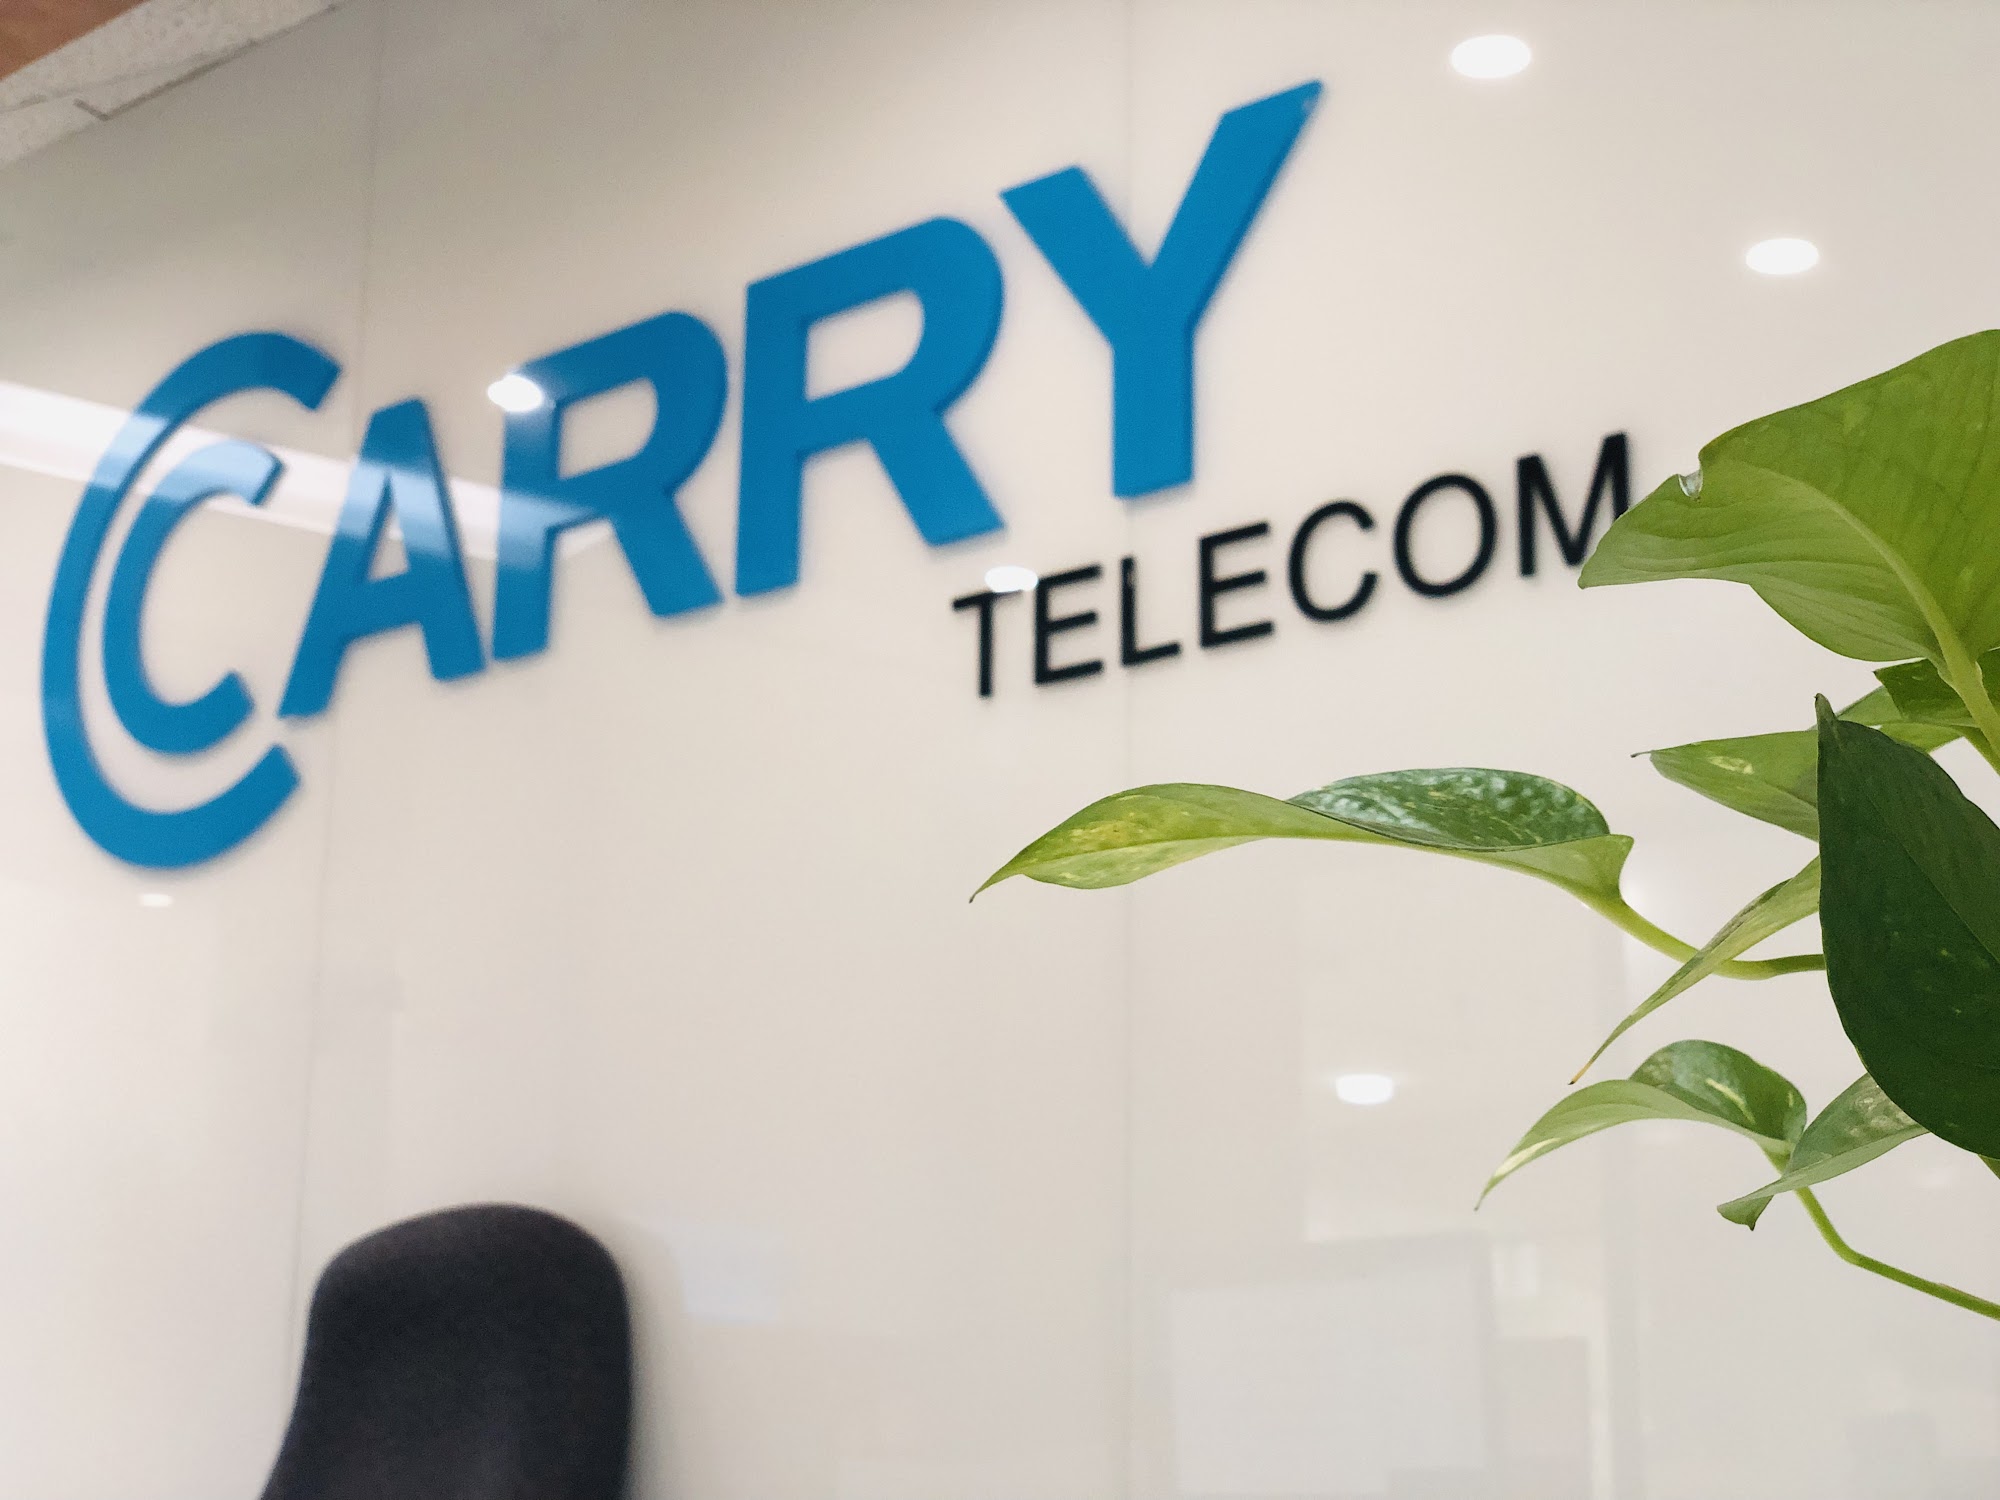 Carry Telecom (Unlimited Internet)